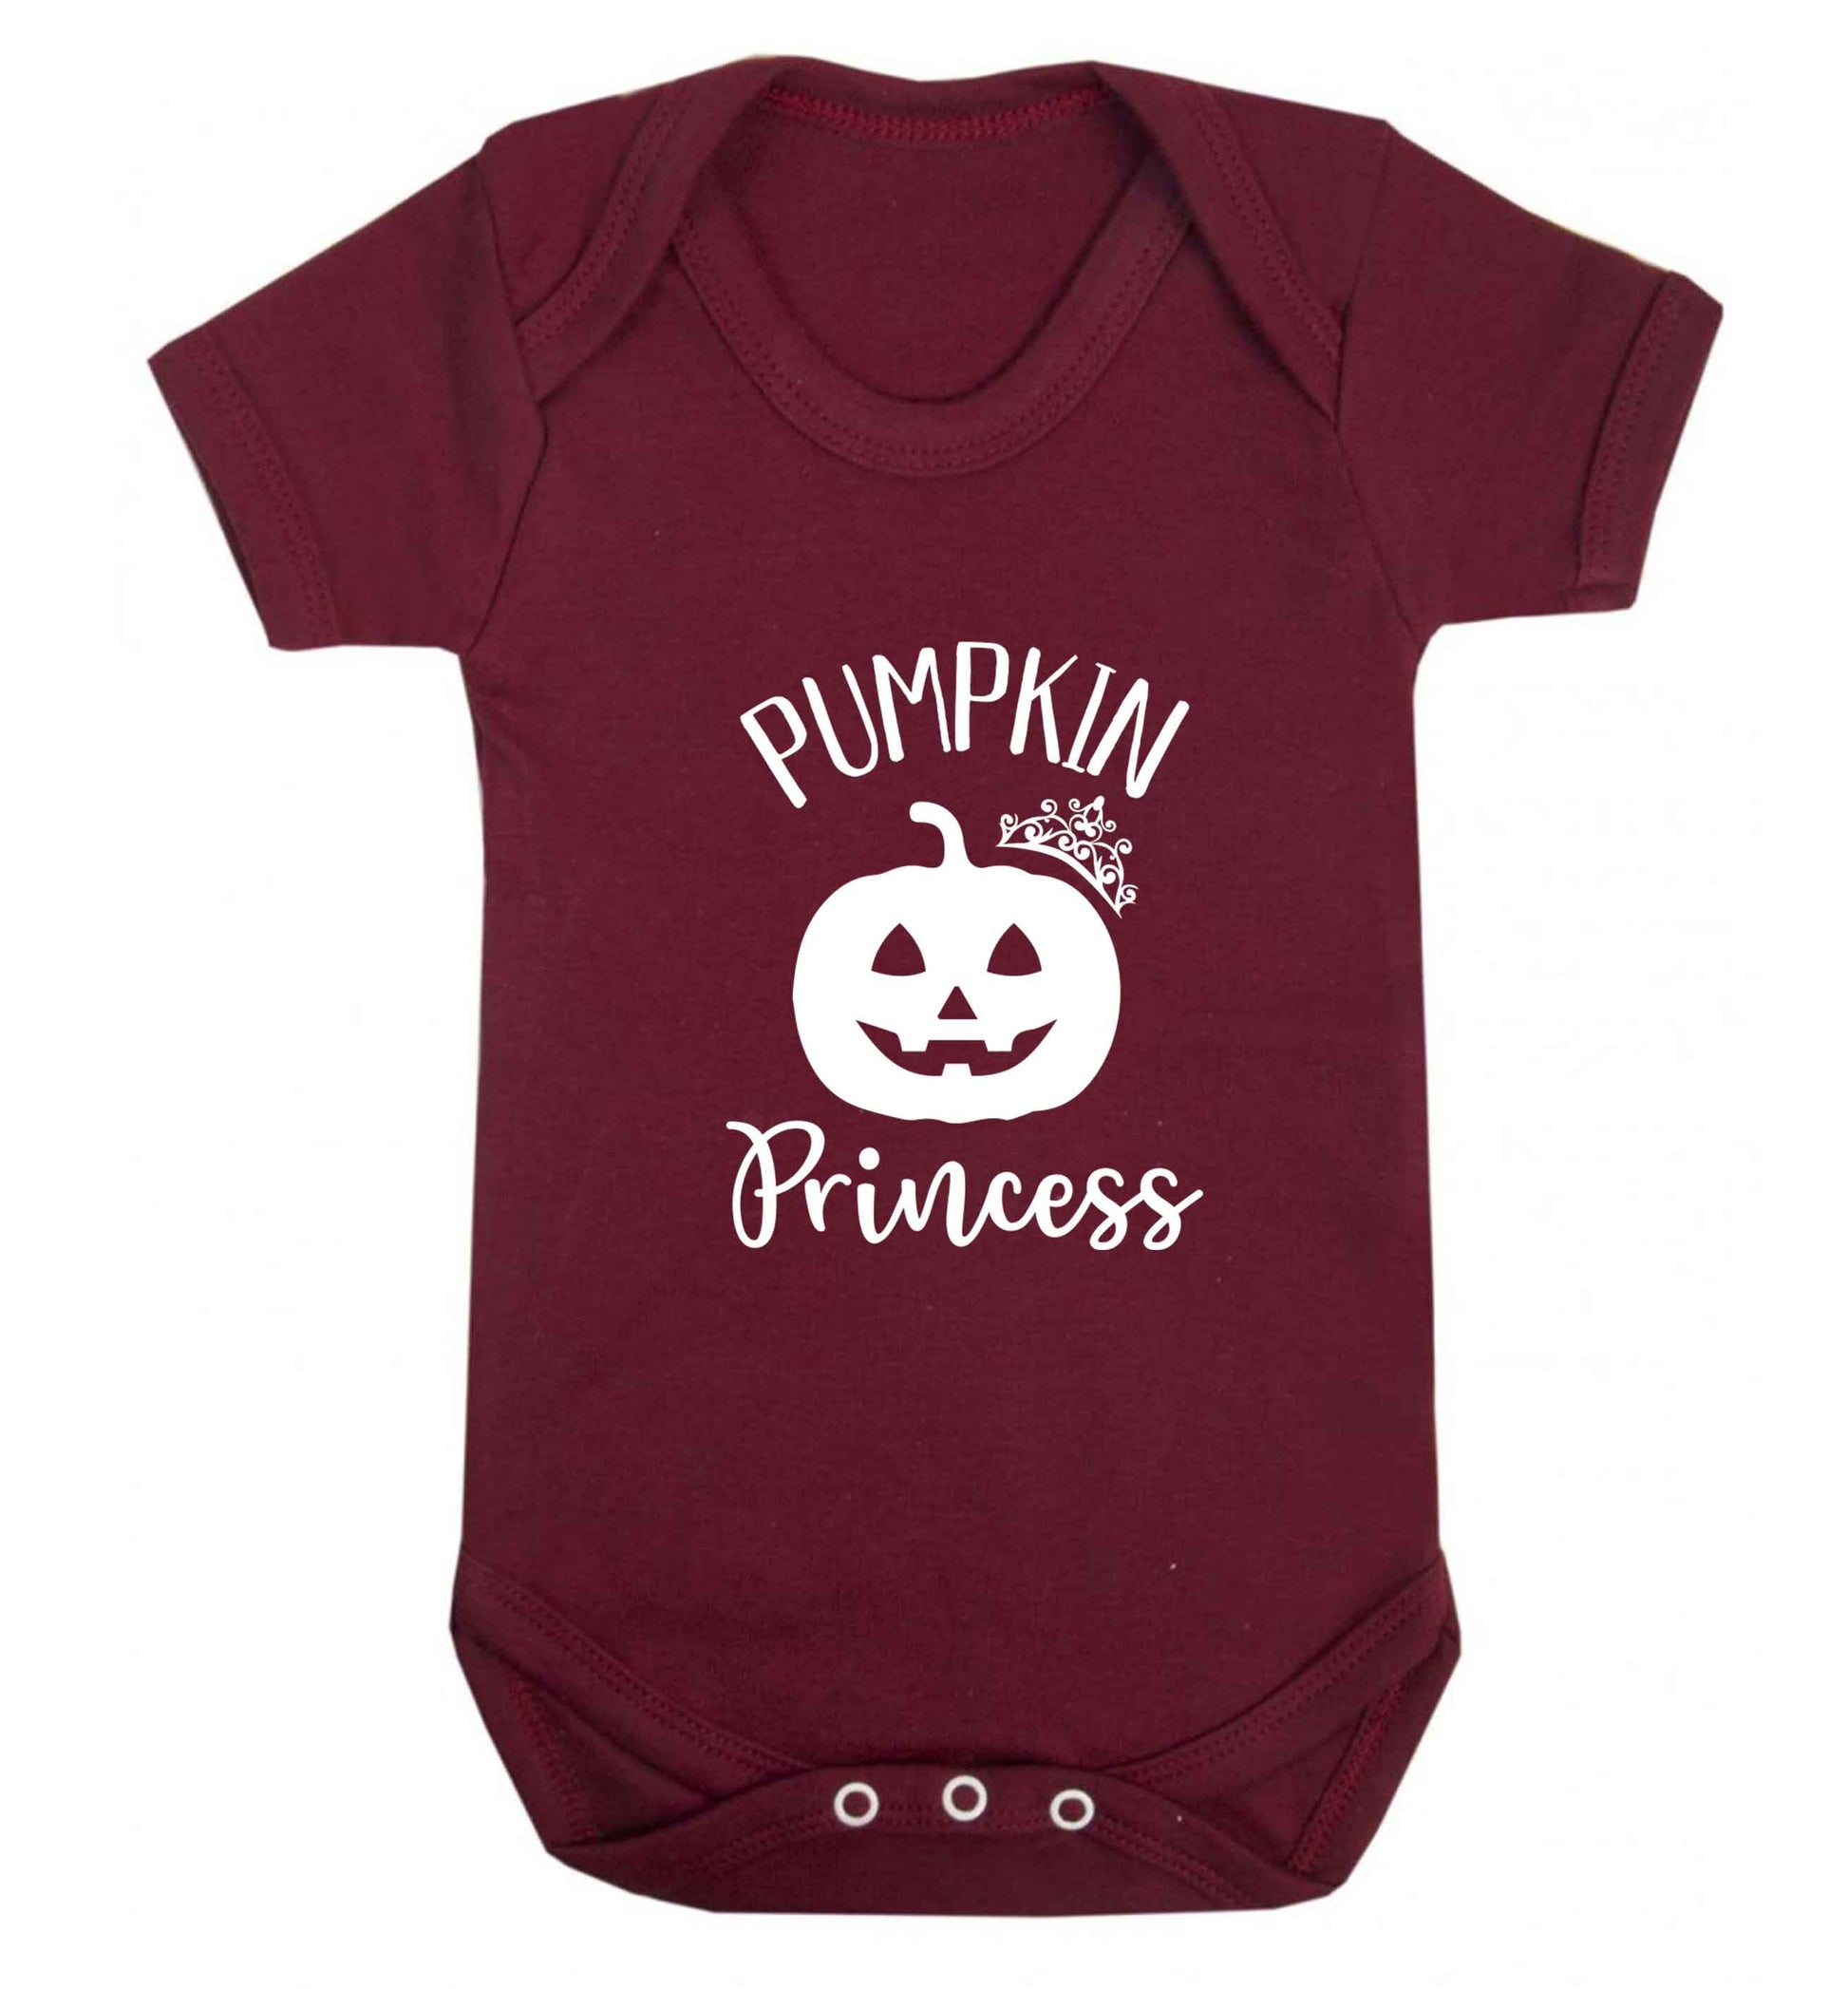 Happiness Pumpkin Spice baby vest maroon 18-24 months